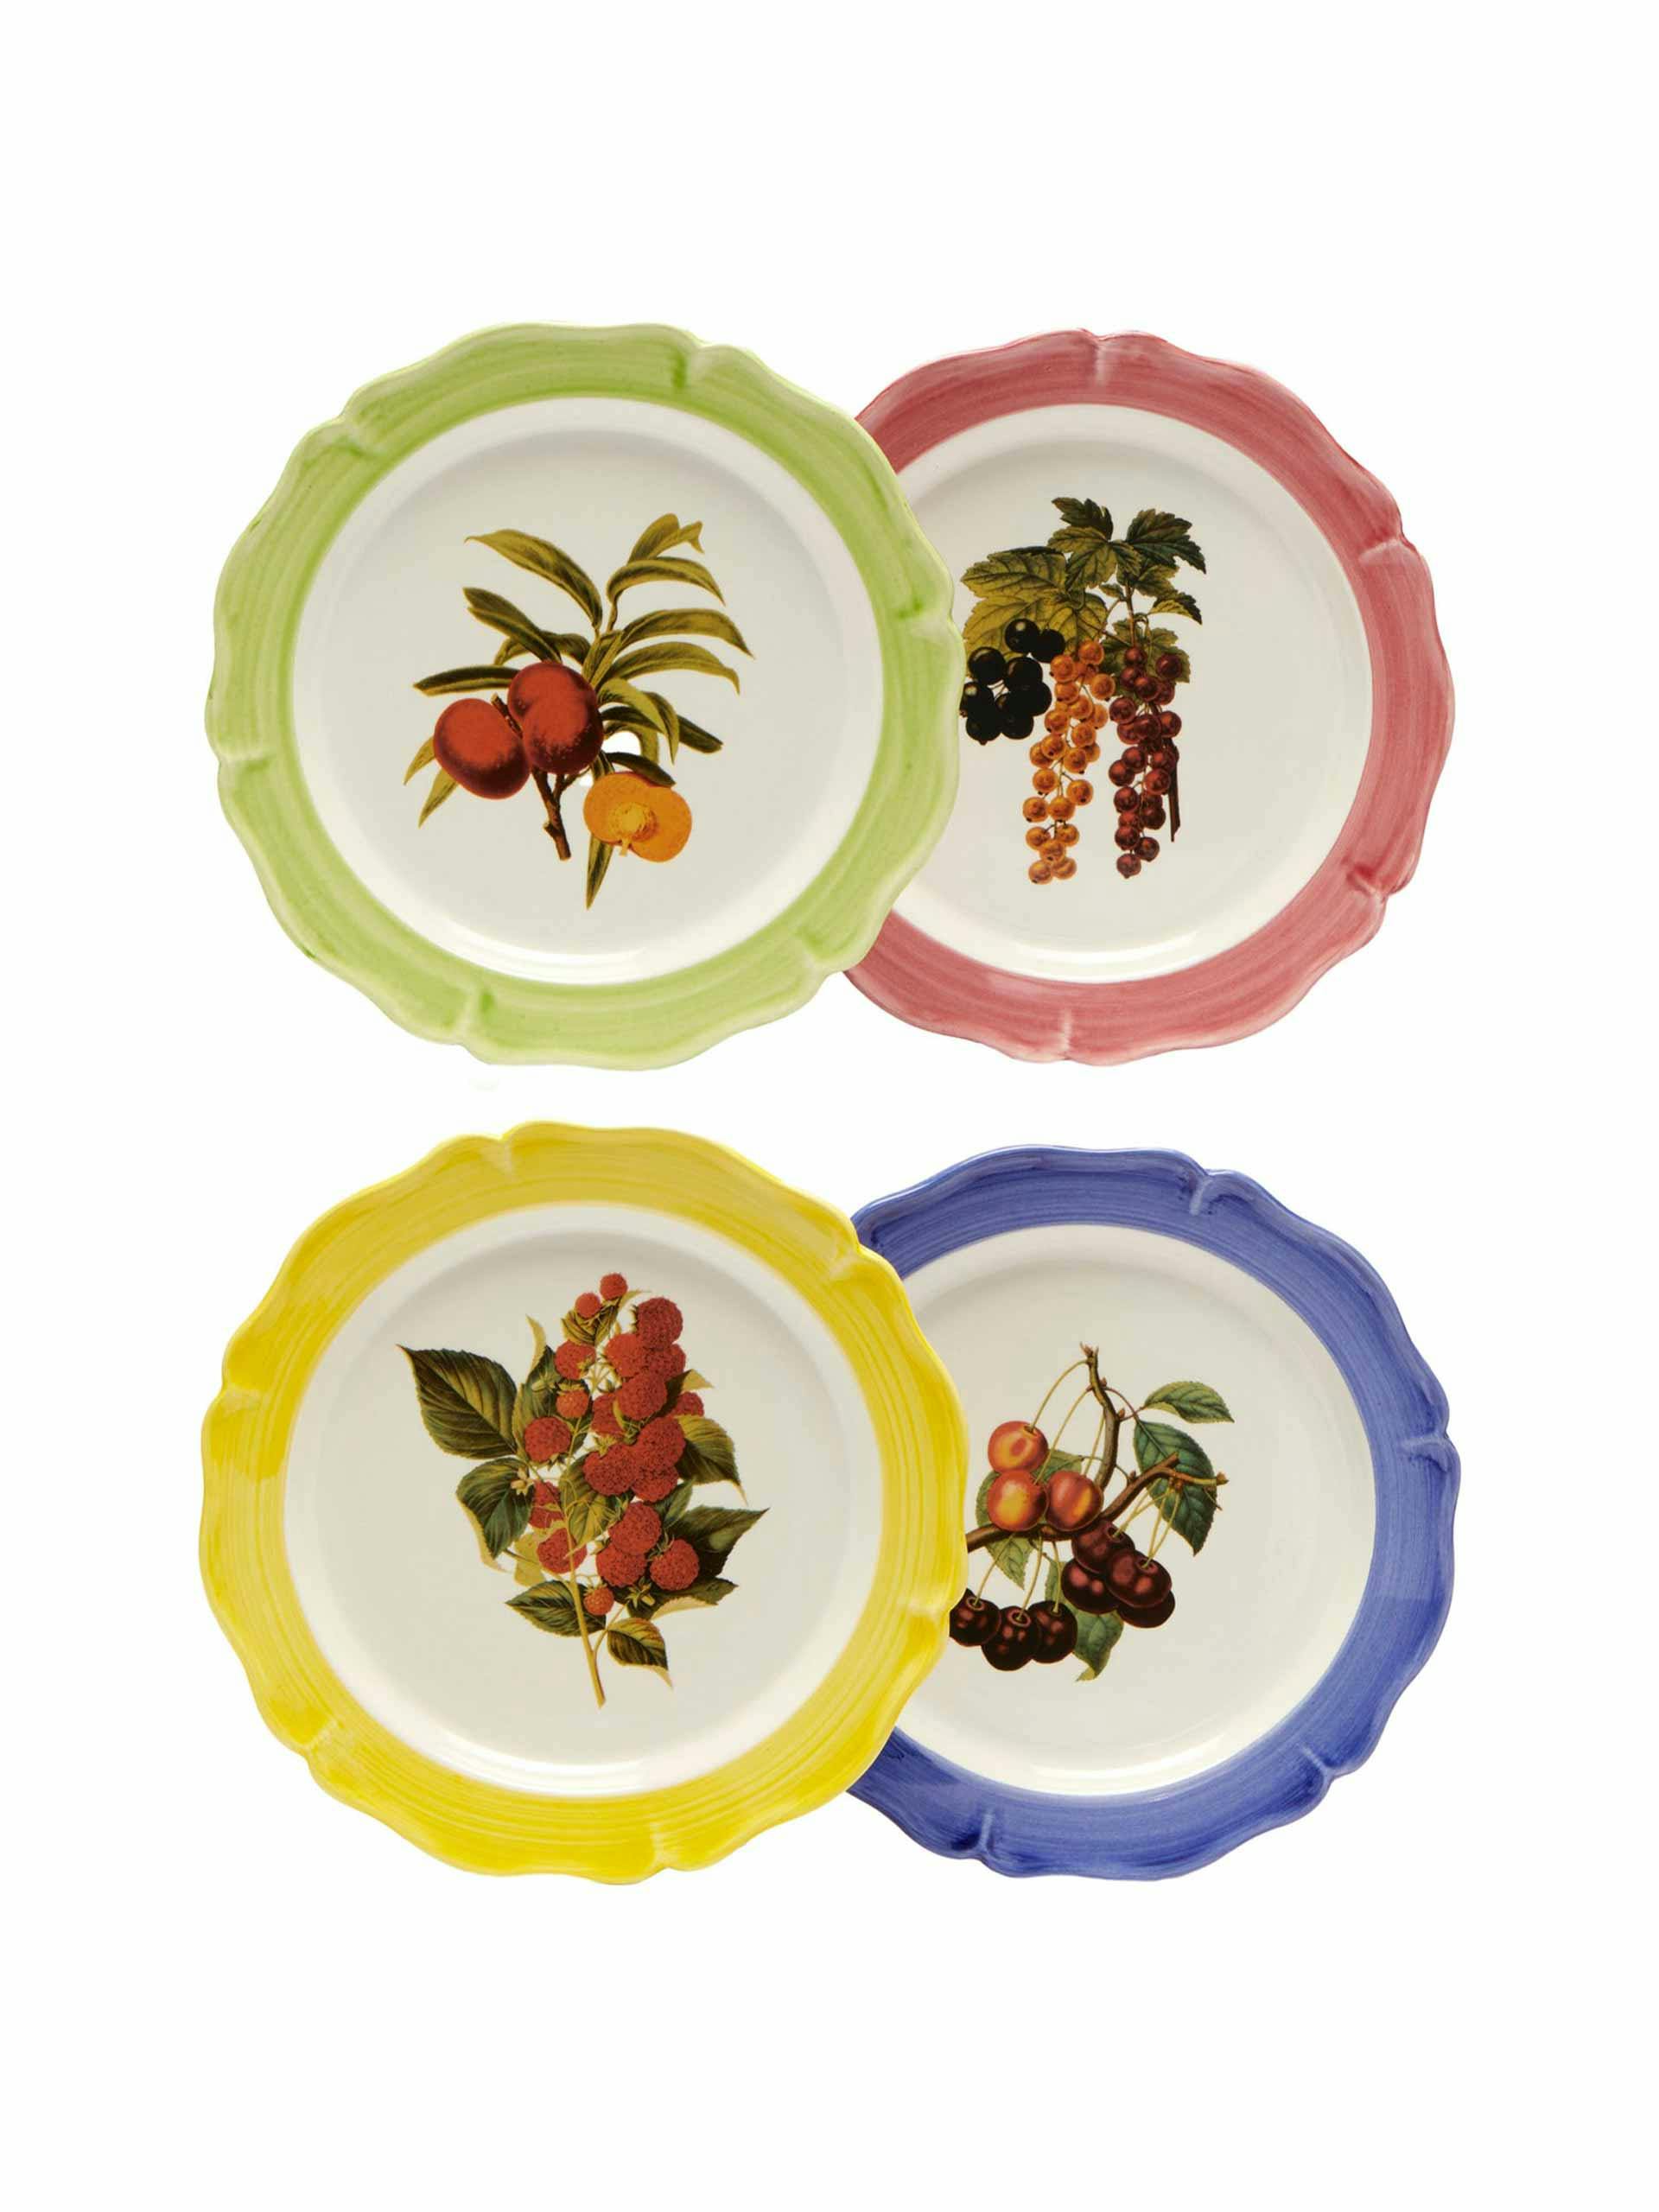 Fruit printed plates